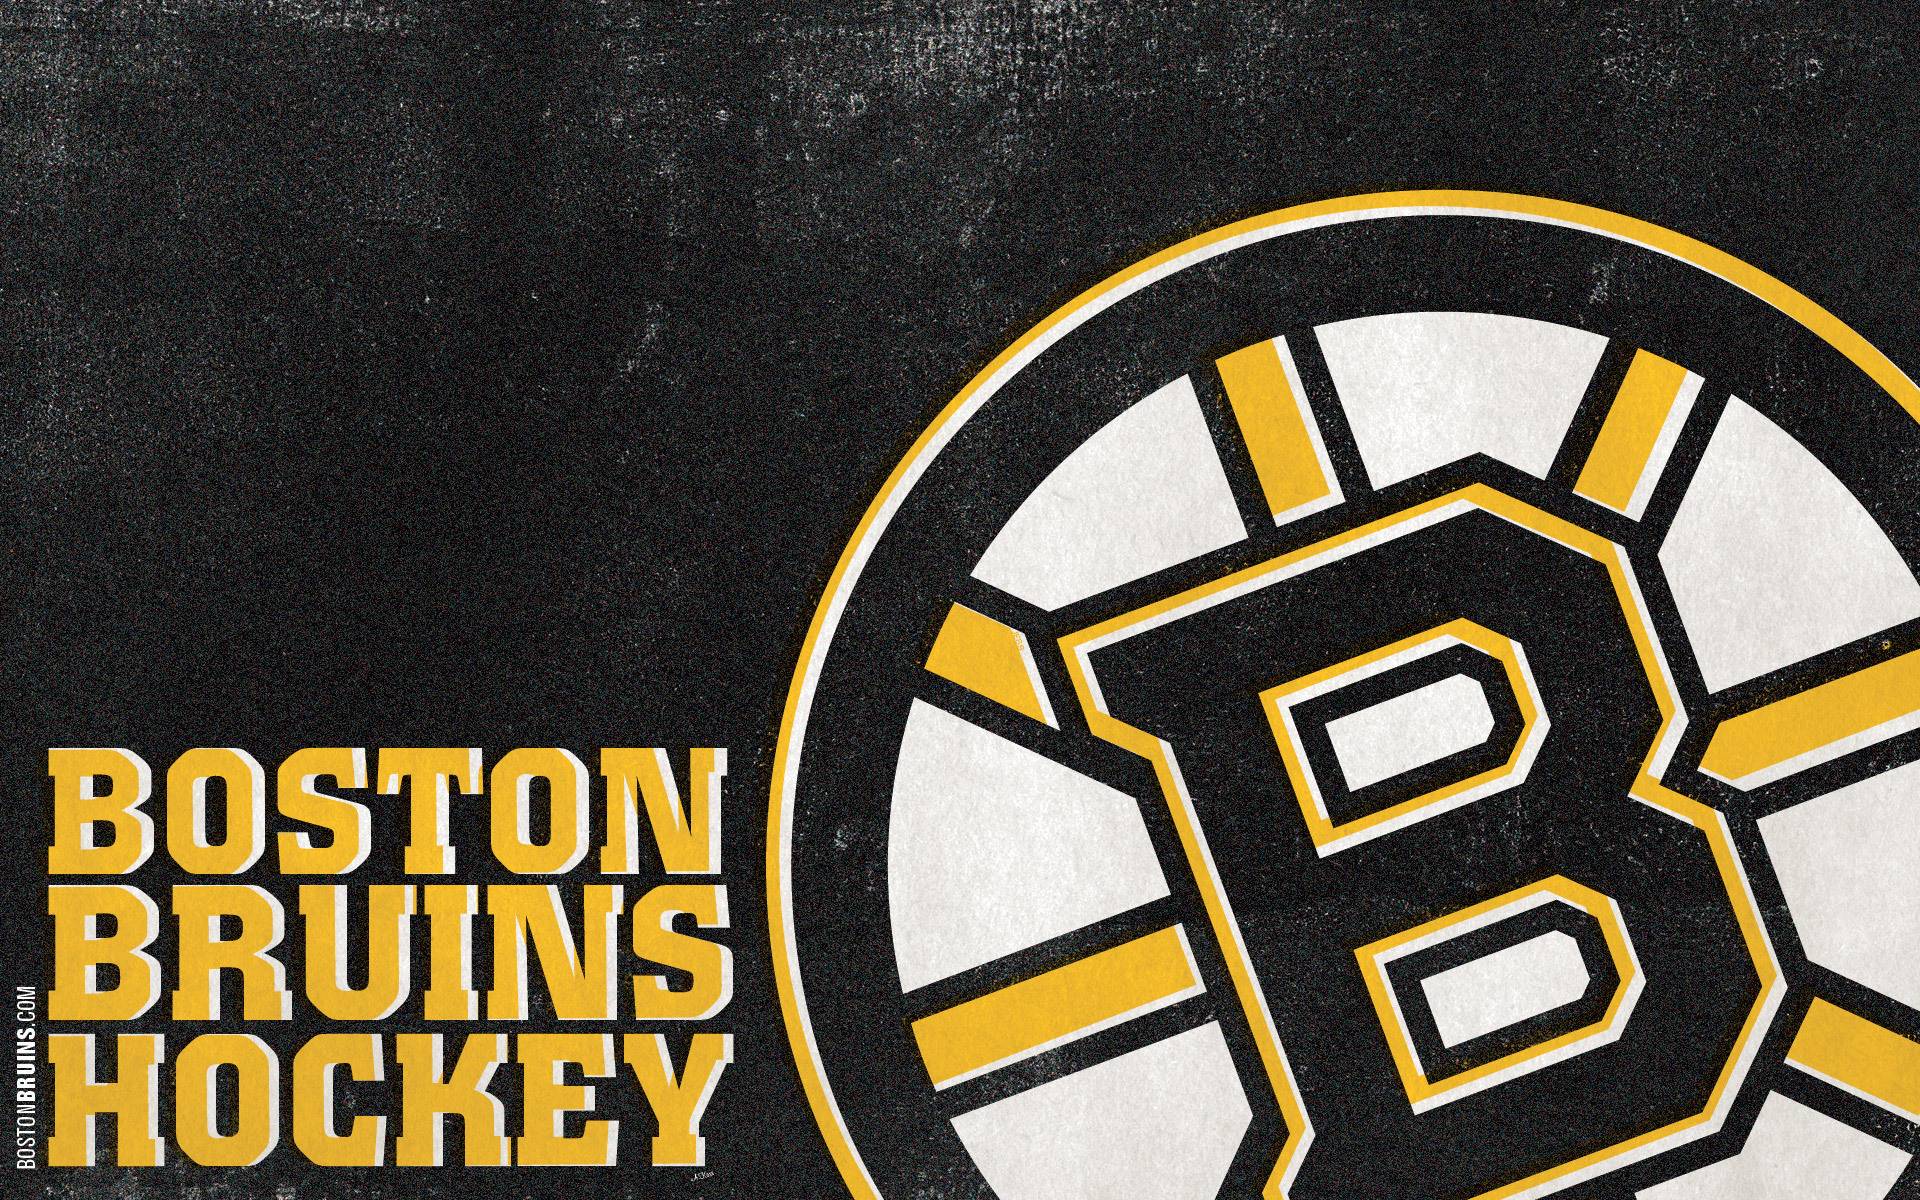 Boston Bruins image Bruins Logo HD wallpaper and background